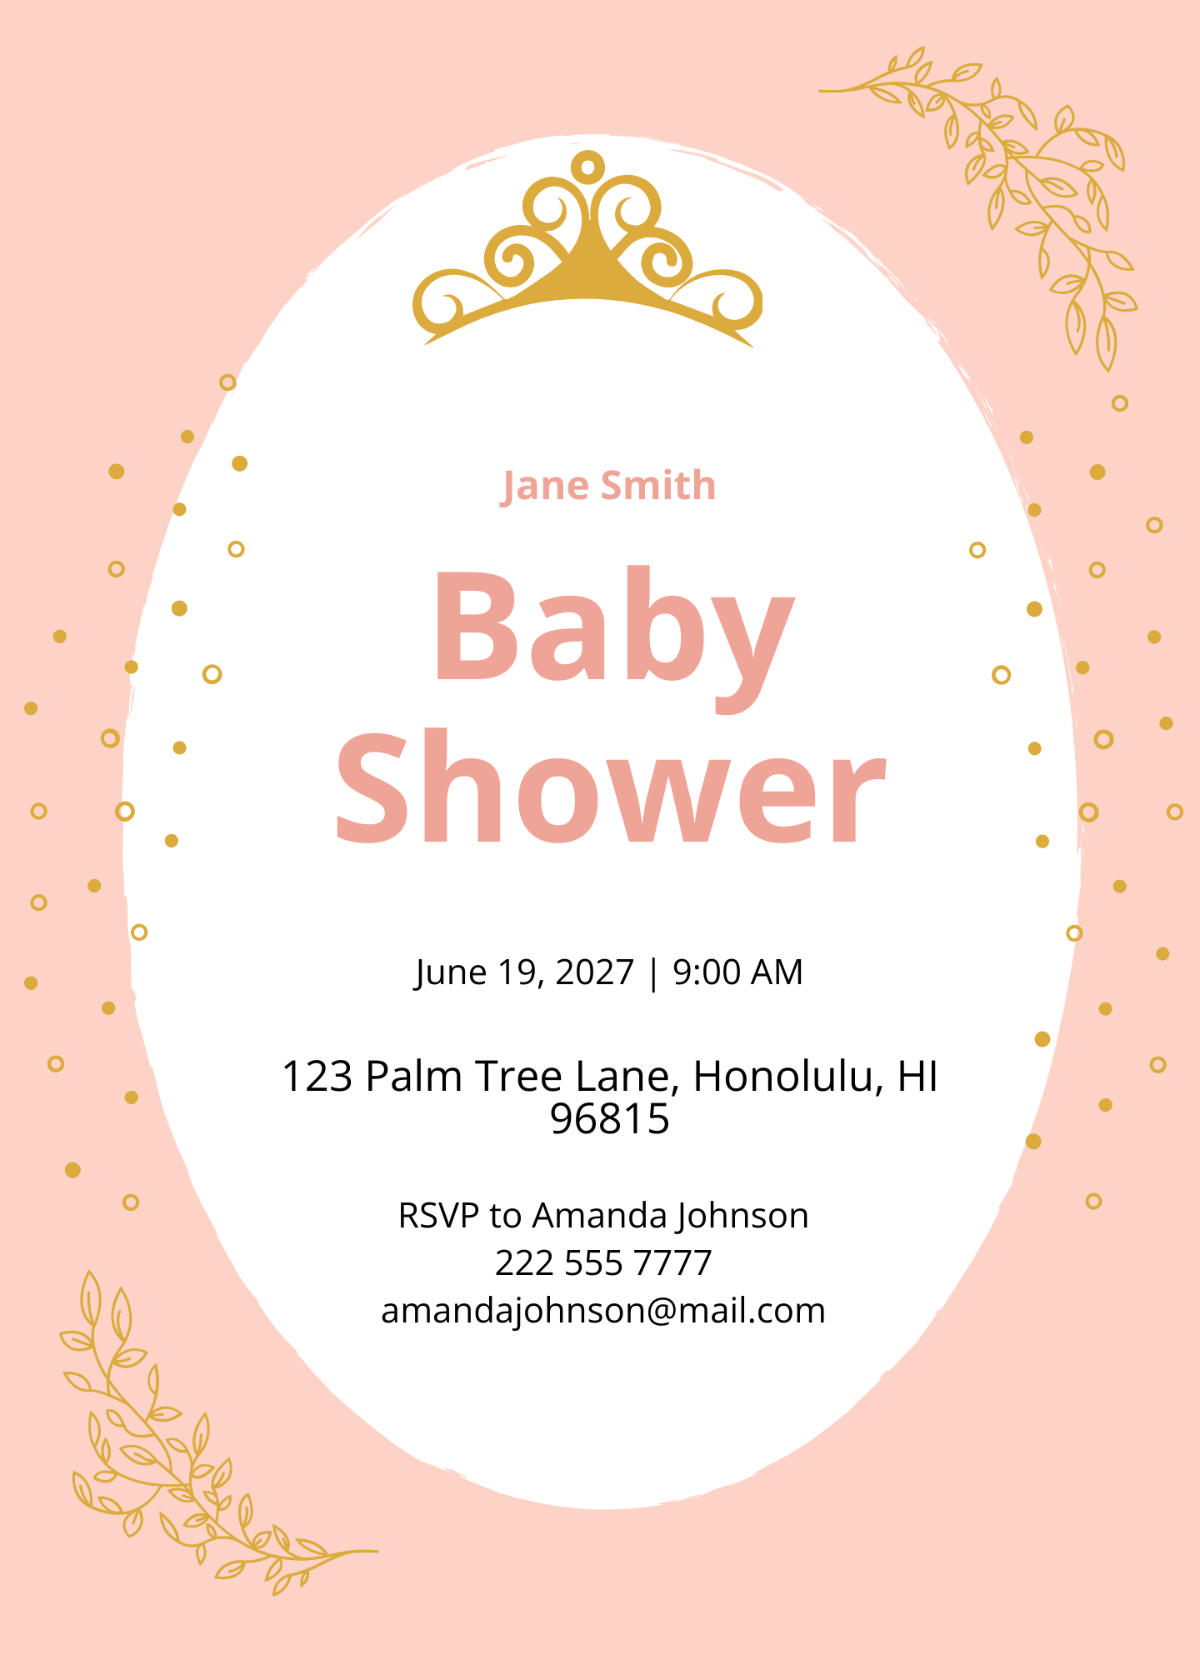 Princess Baby Shower Invitation